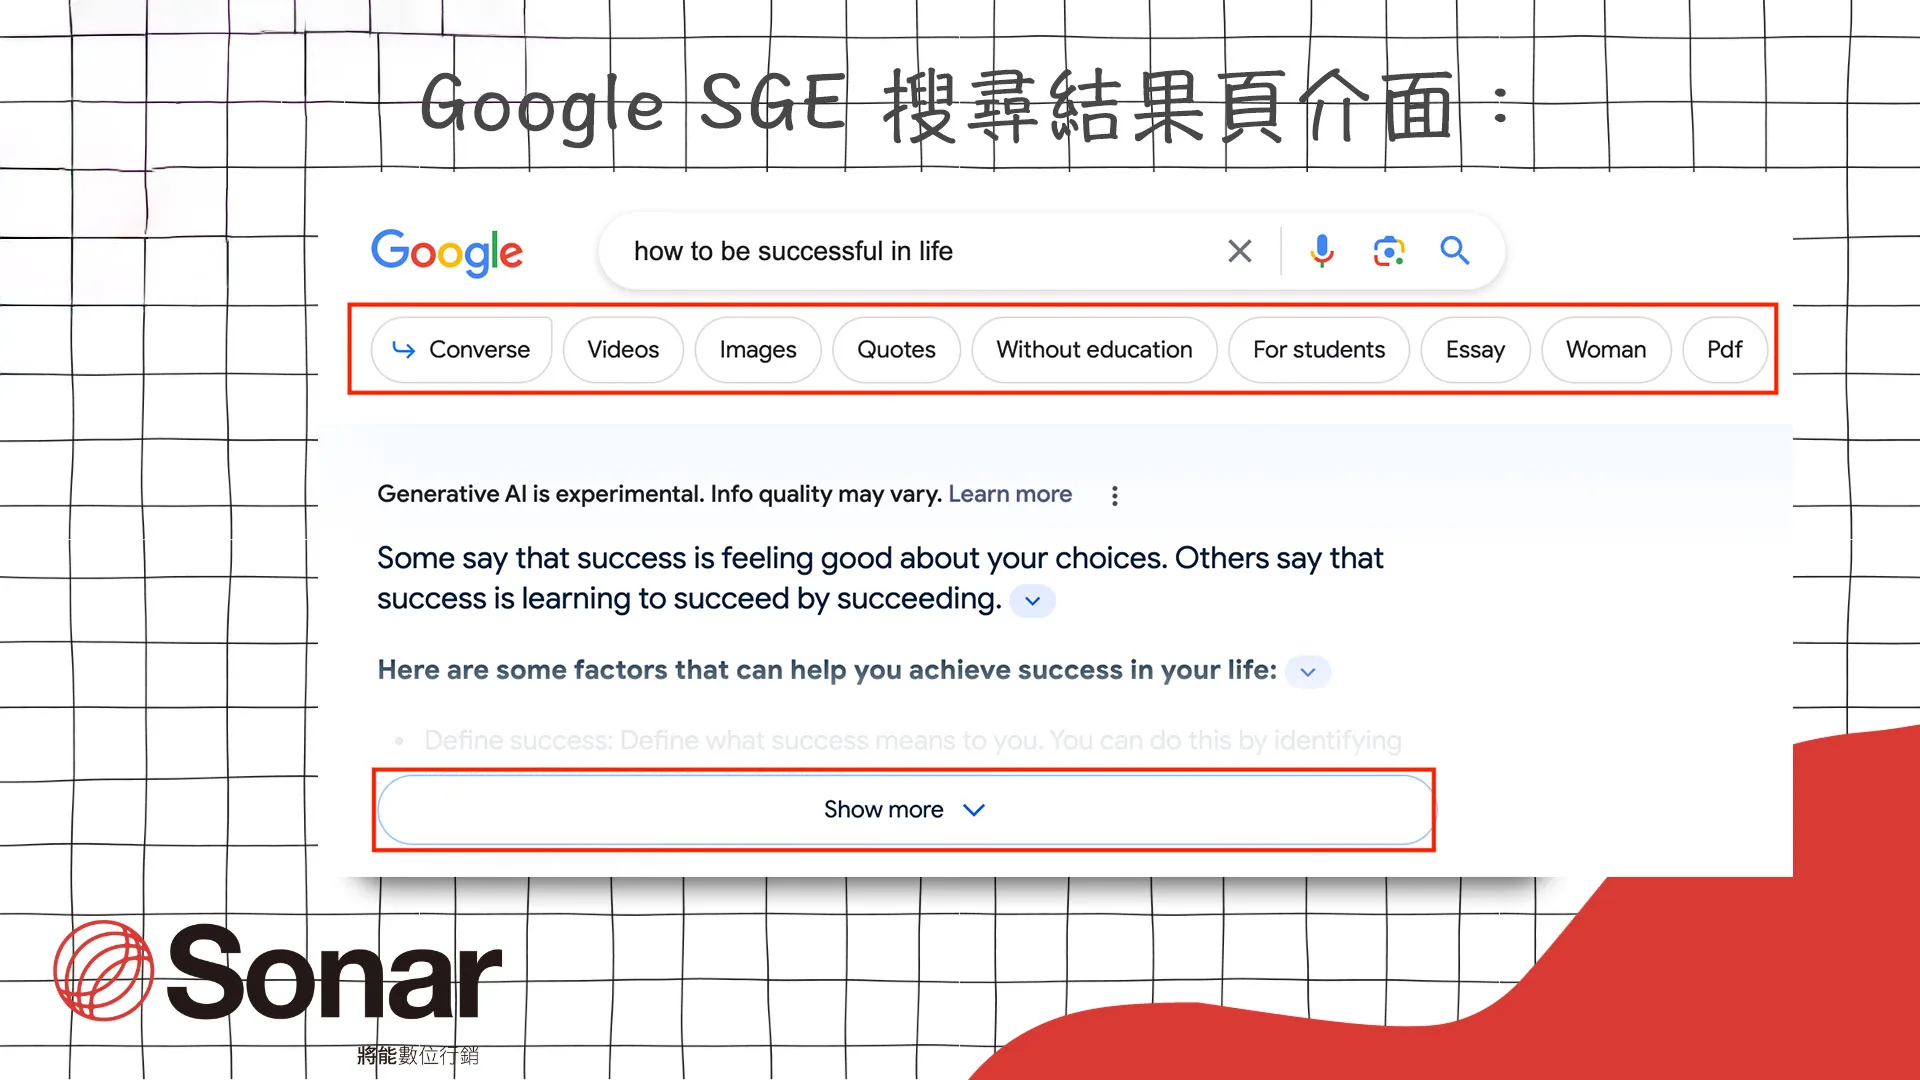 Google-SGE-搜尋結果頁介面